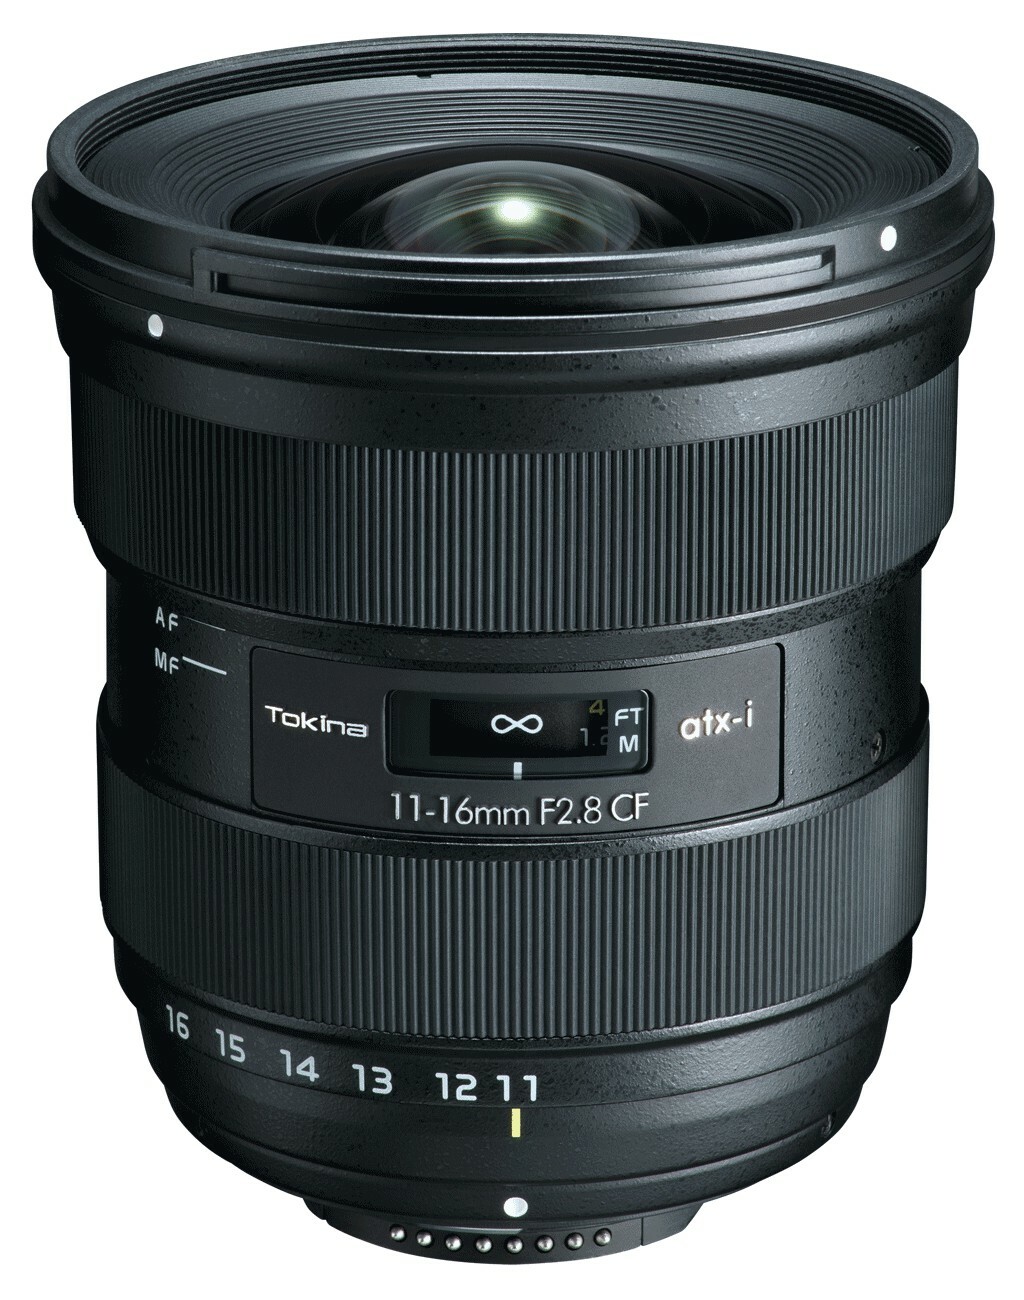 Tokina atx-i 11-16mm F2.8 CF PLUS Canon EF